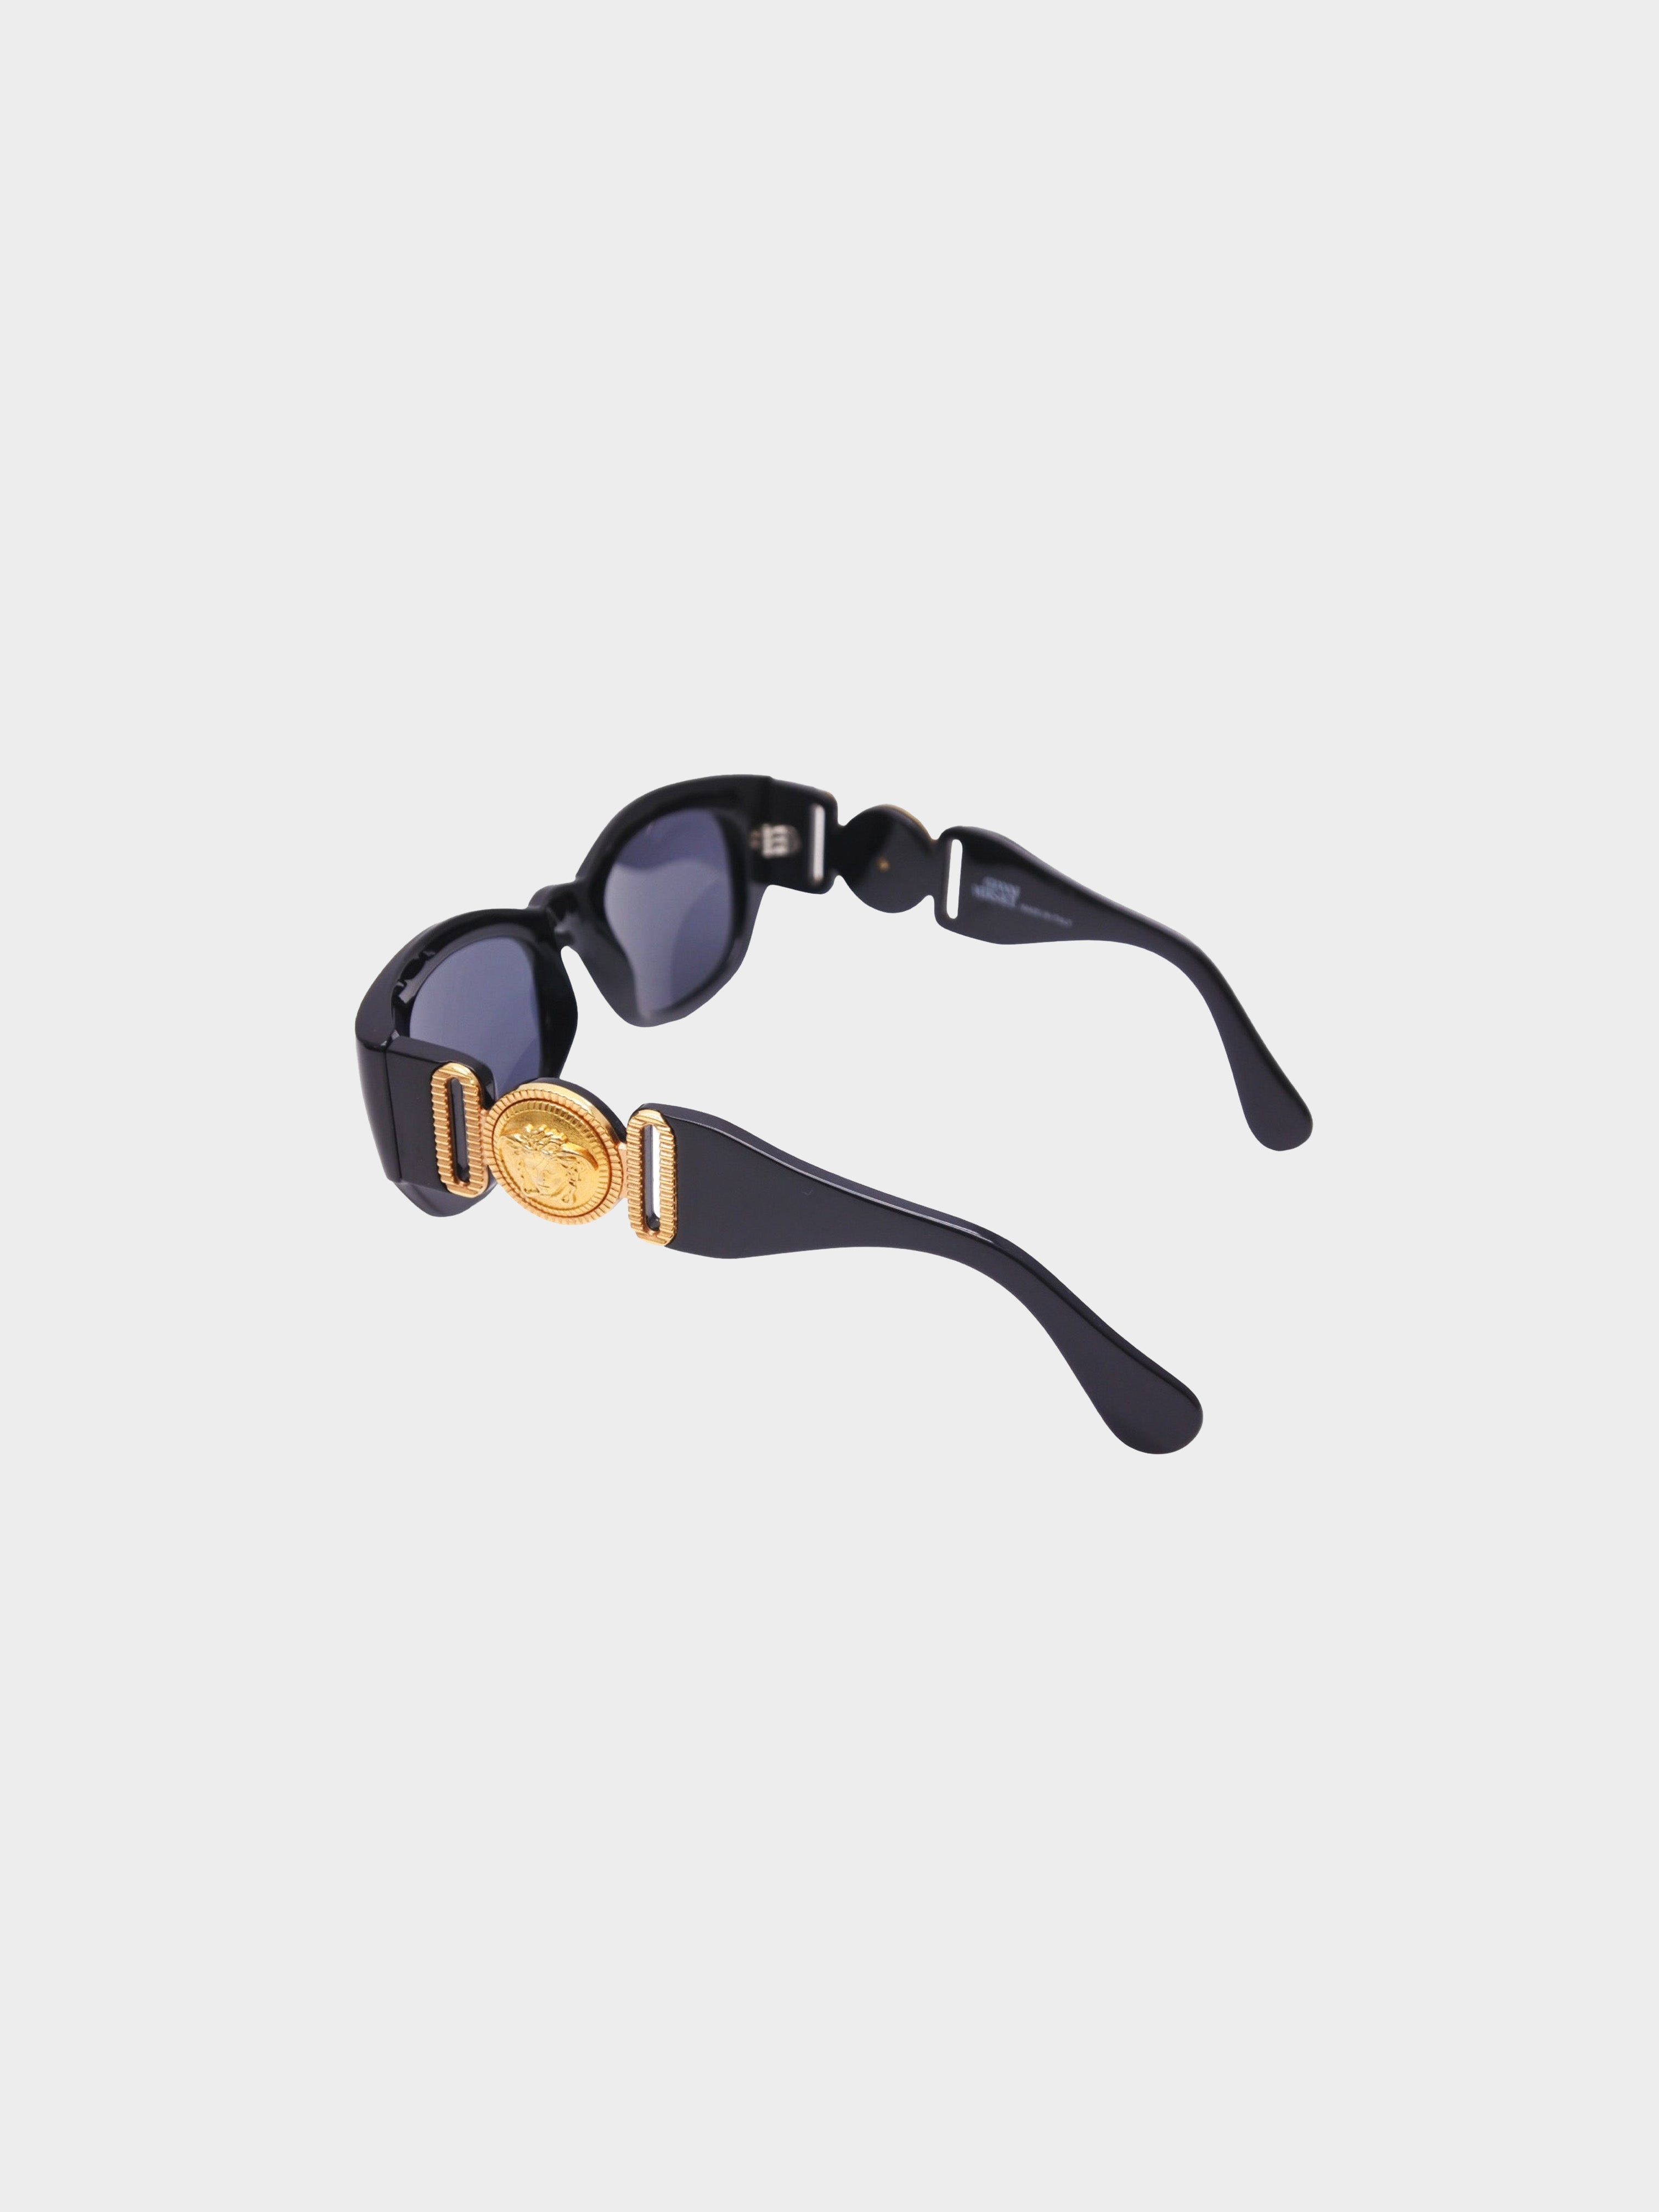 Gianni Versace 1990s Medusa Sunglasses